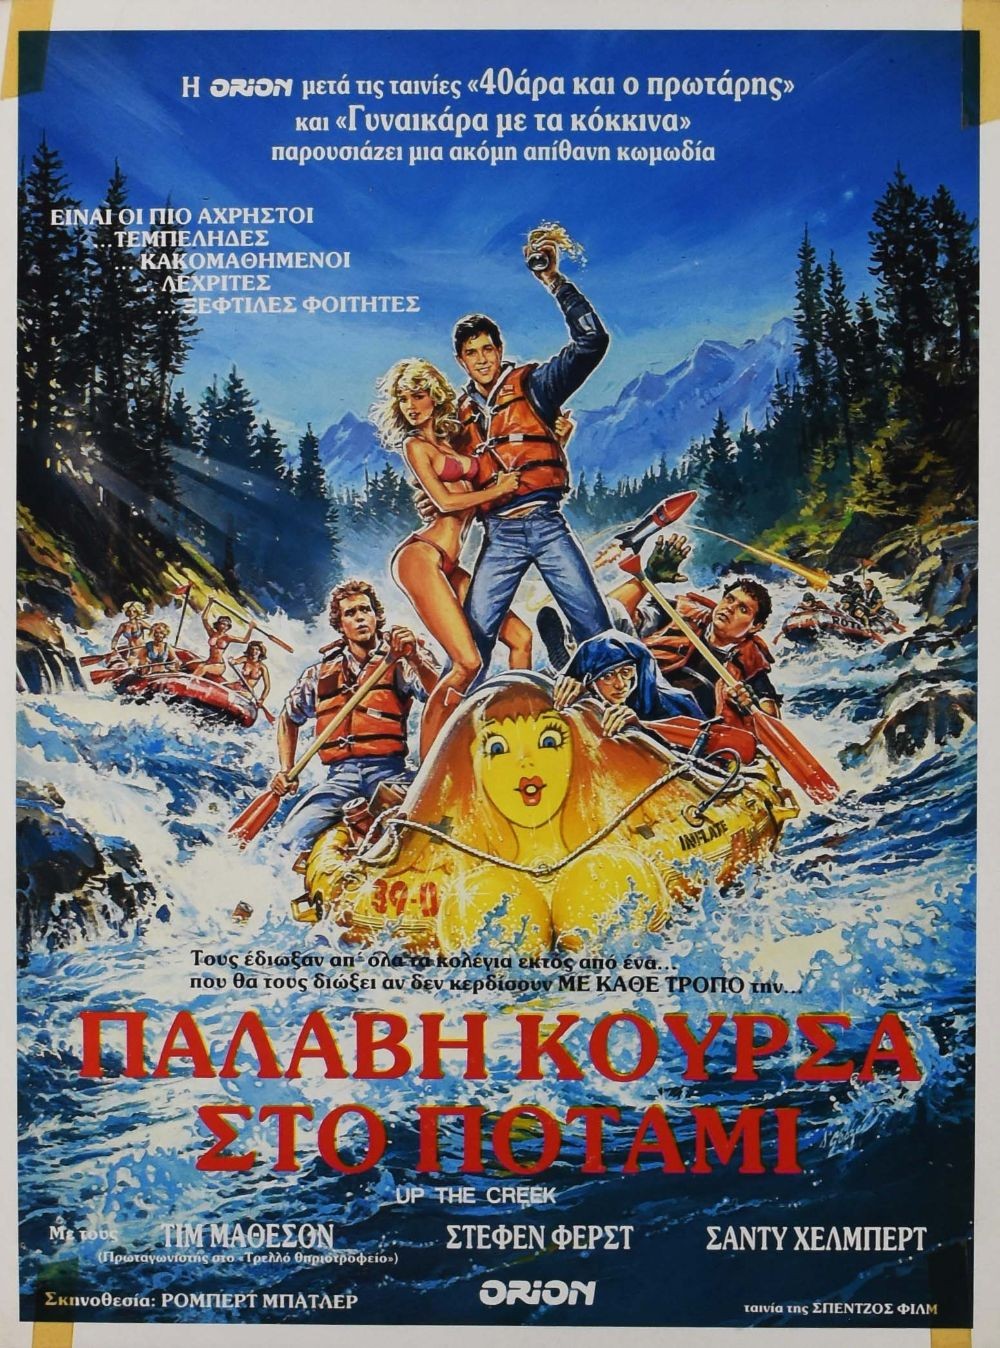 Up the Creek original movie poster